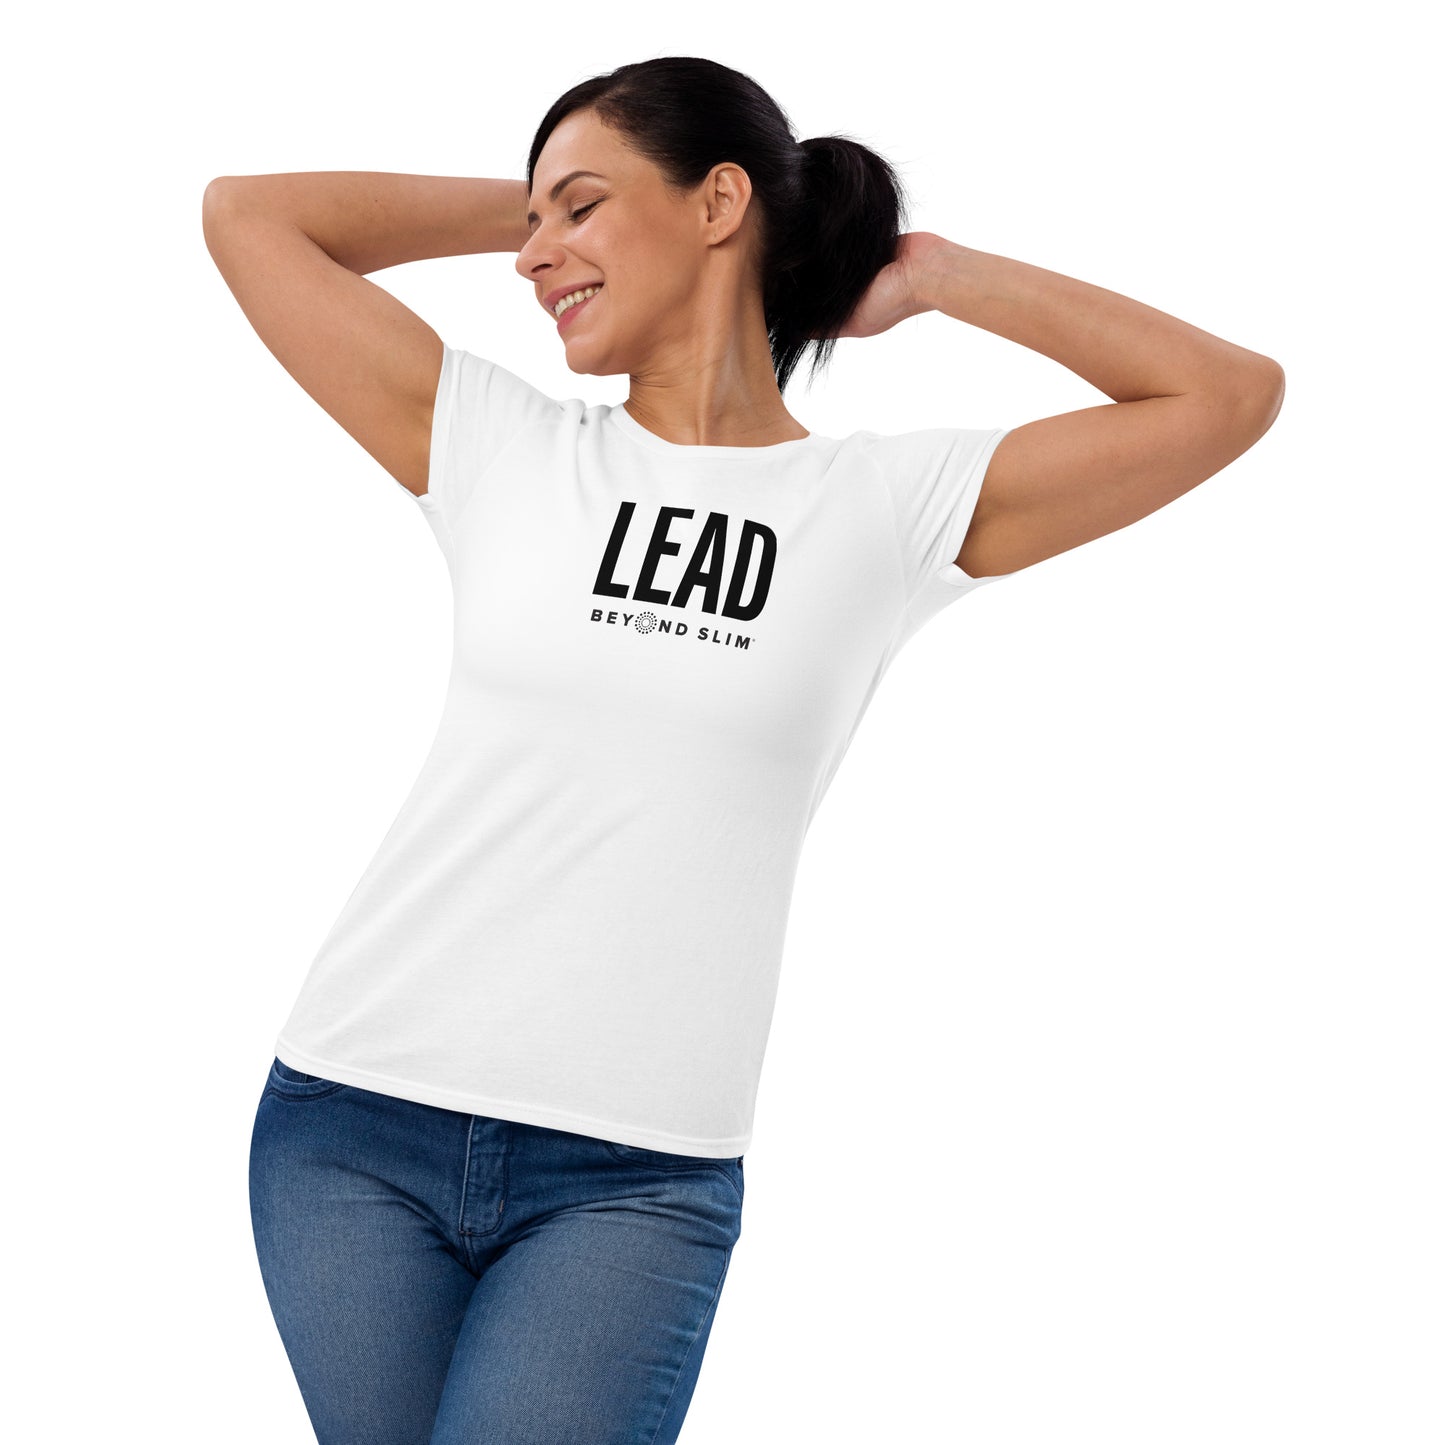 LEAD Women's short sleeve t-shirt